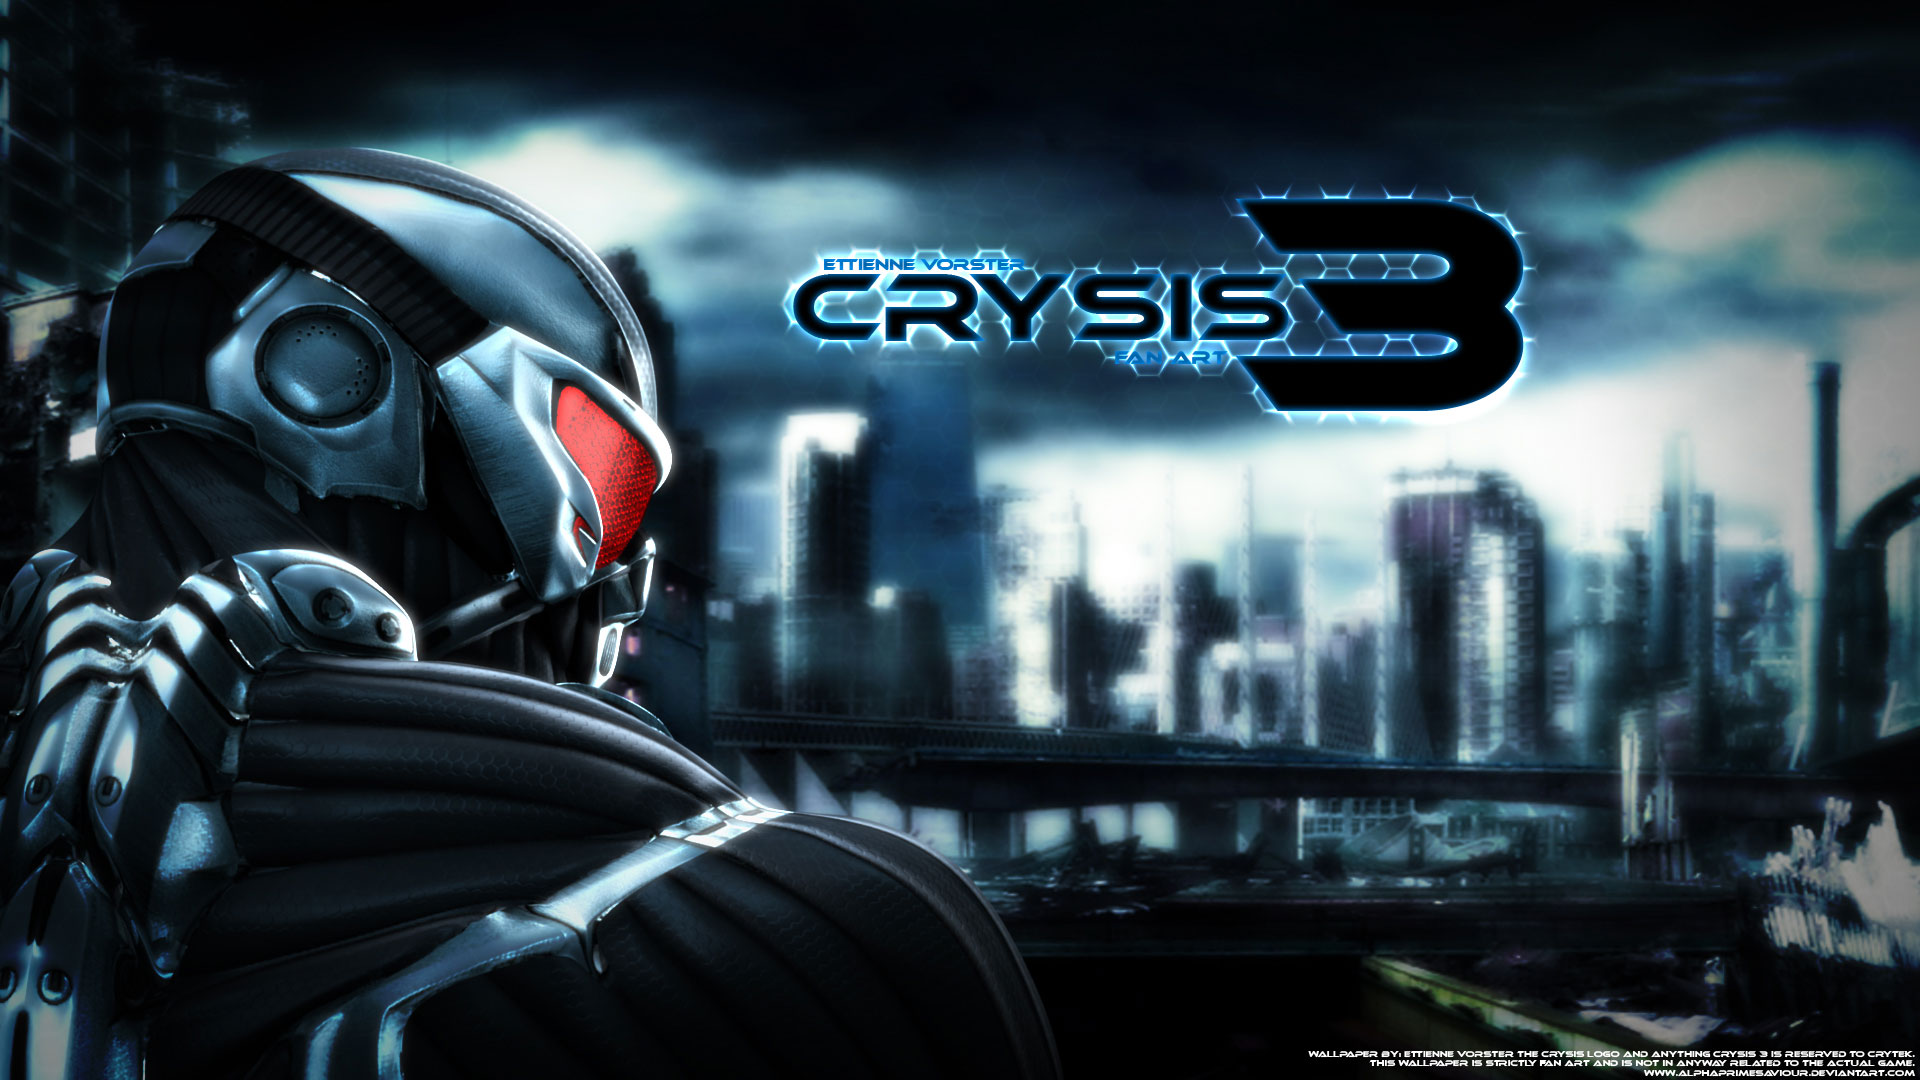 Crysis3 video prohozdenie